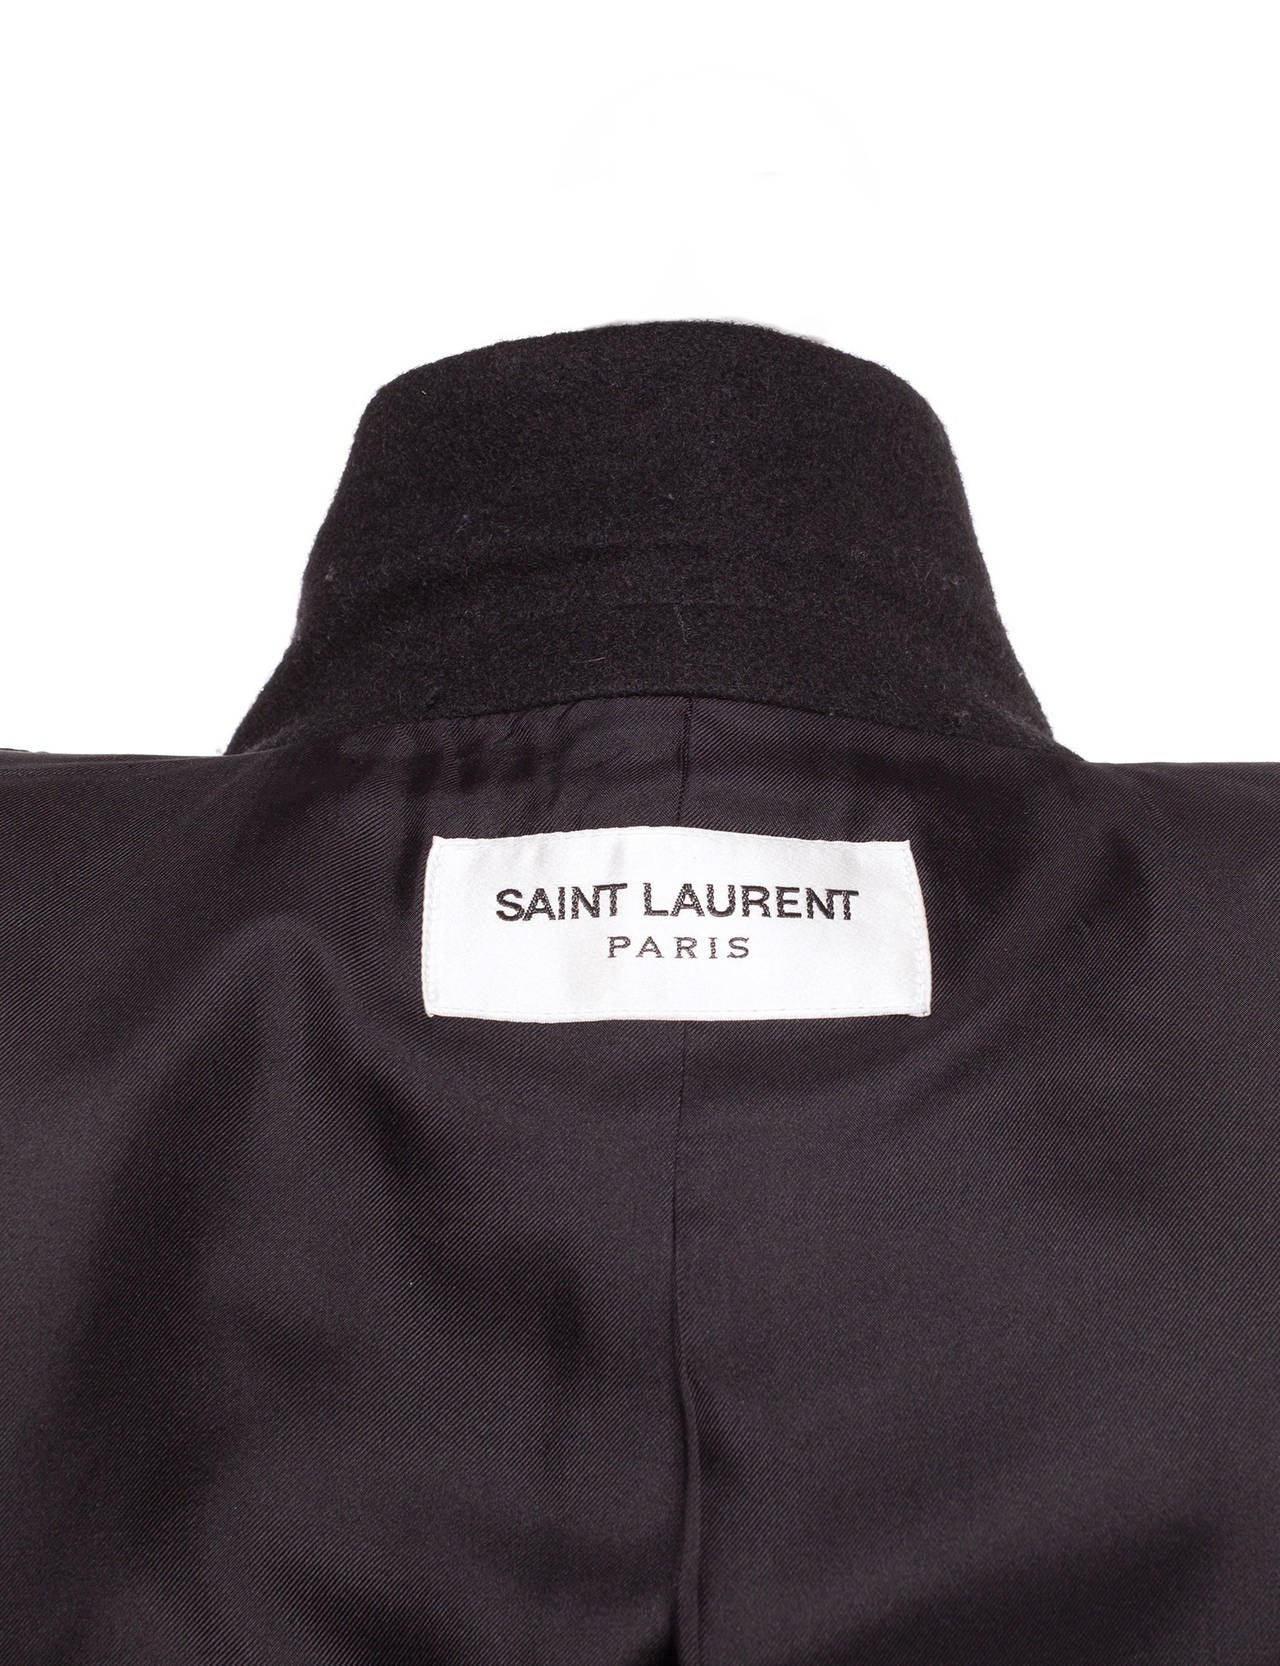 Saint Laurent by Hedi Slimane Wool tuxedo coat, Sz. XS 3